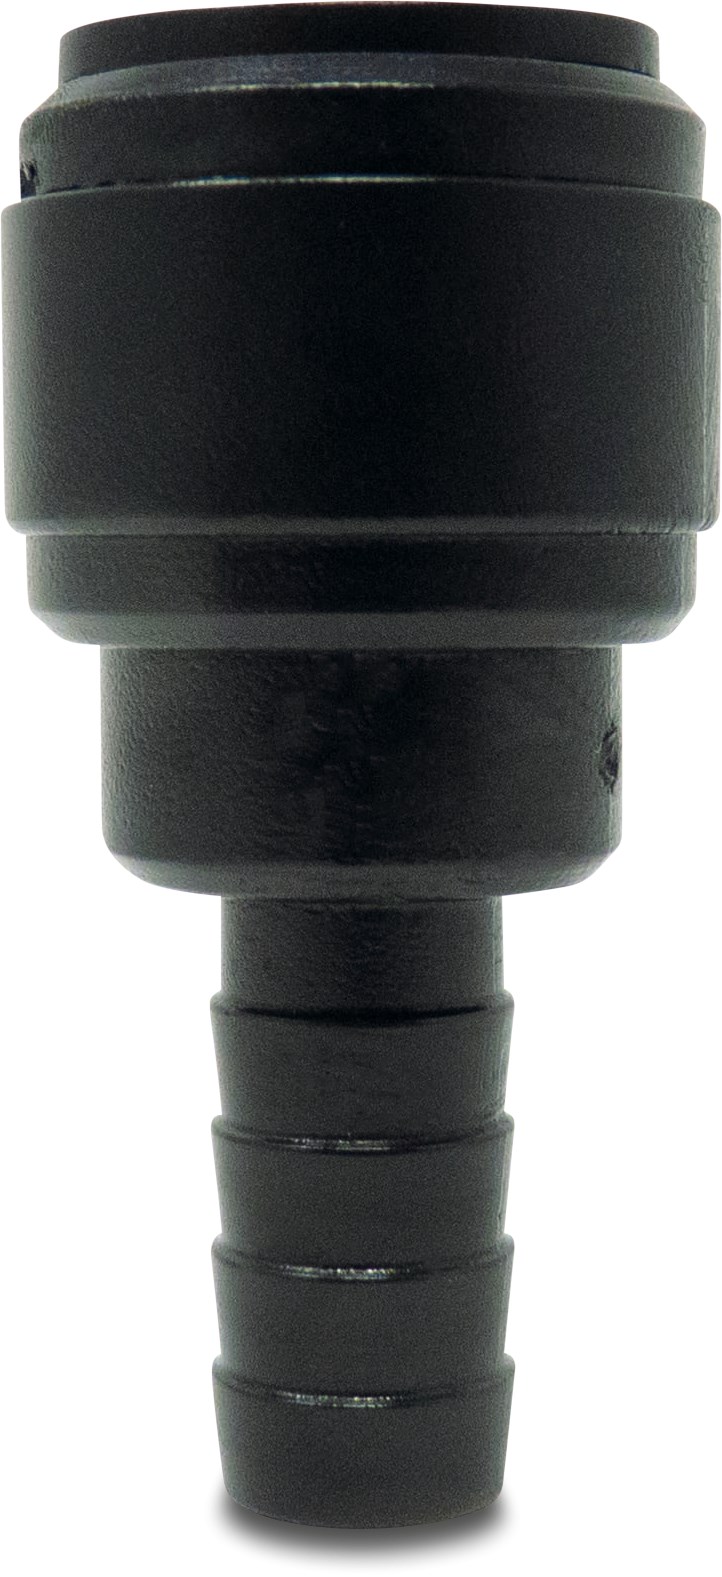 Adaptor socket POM 12 mm x 10 mm push-in x barbed 14bar black WRAS type Aquaspeed